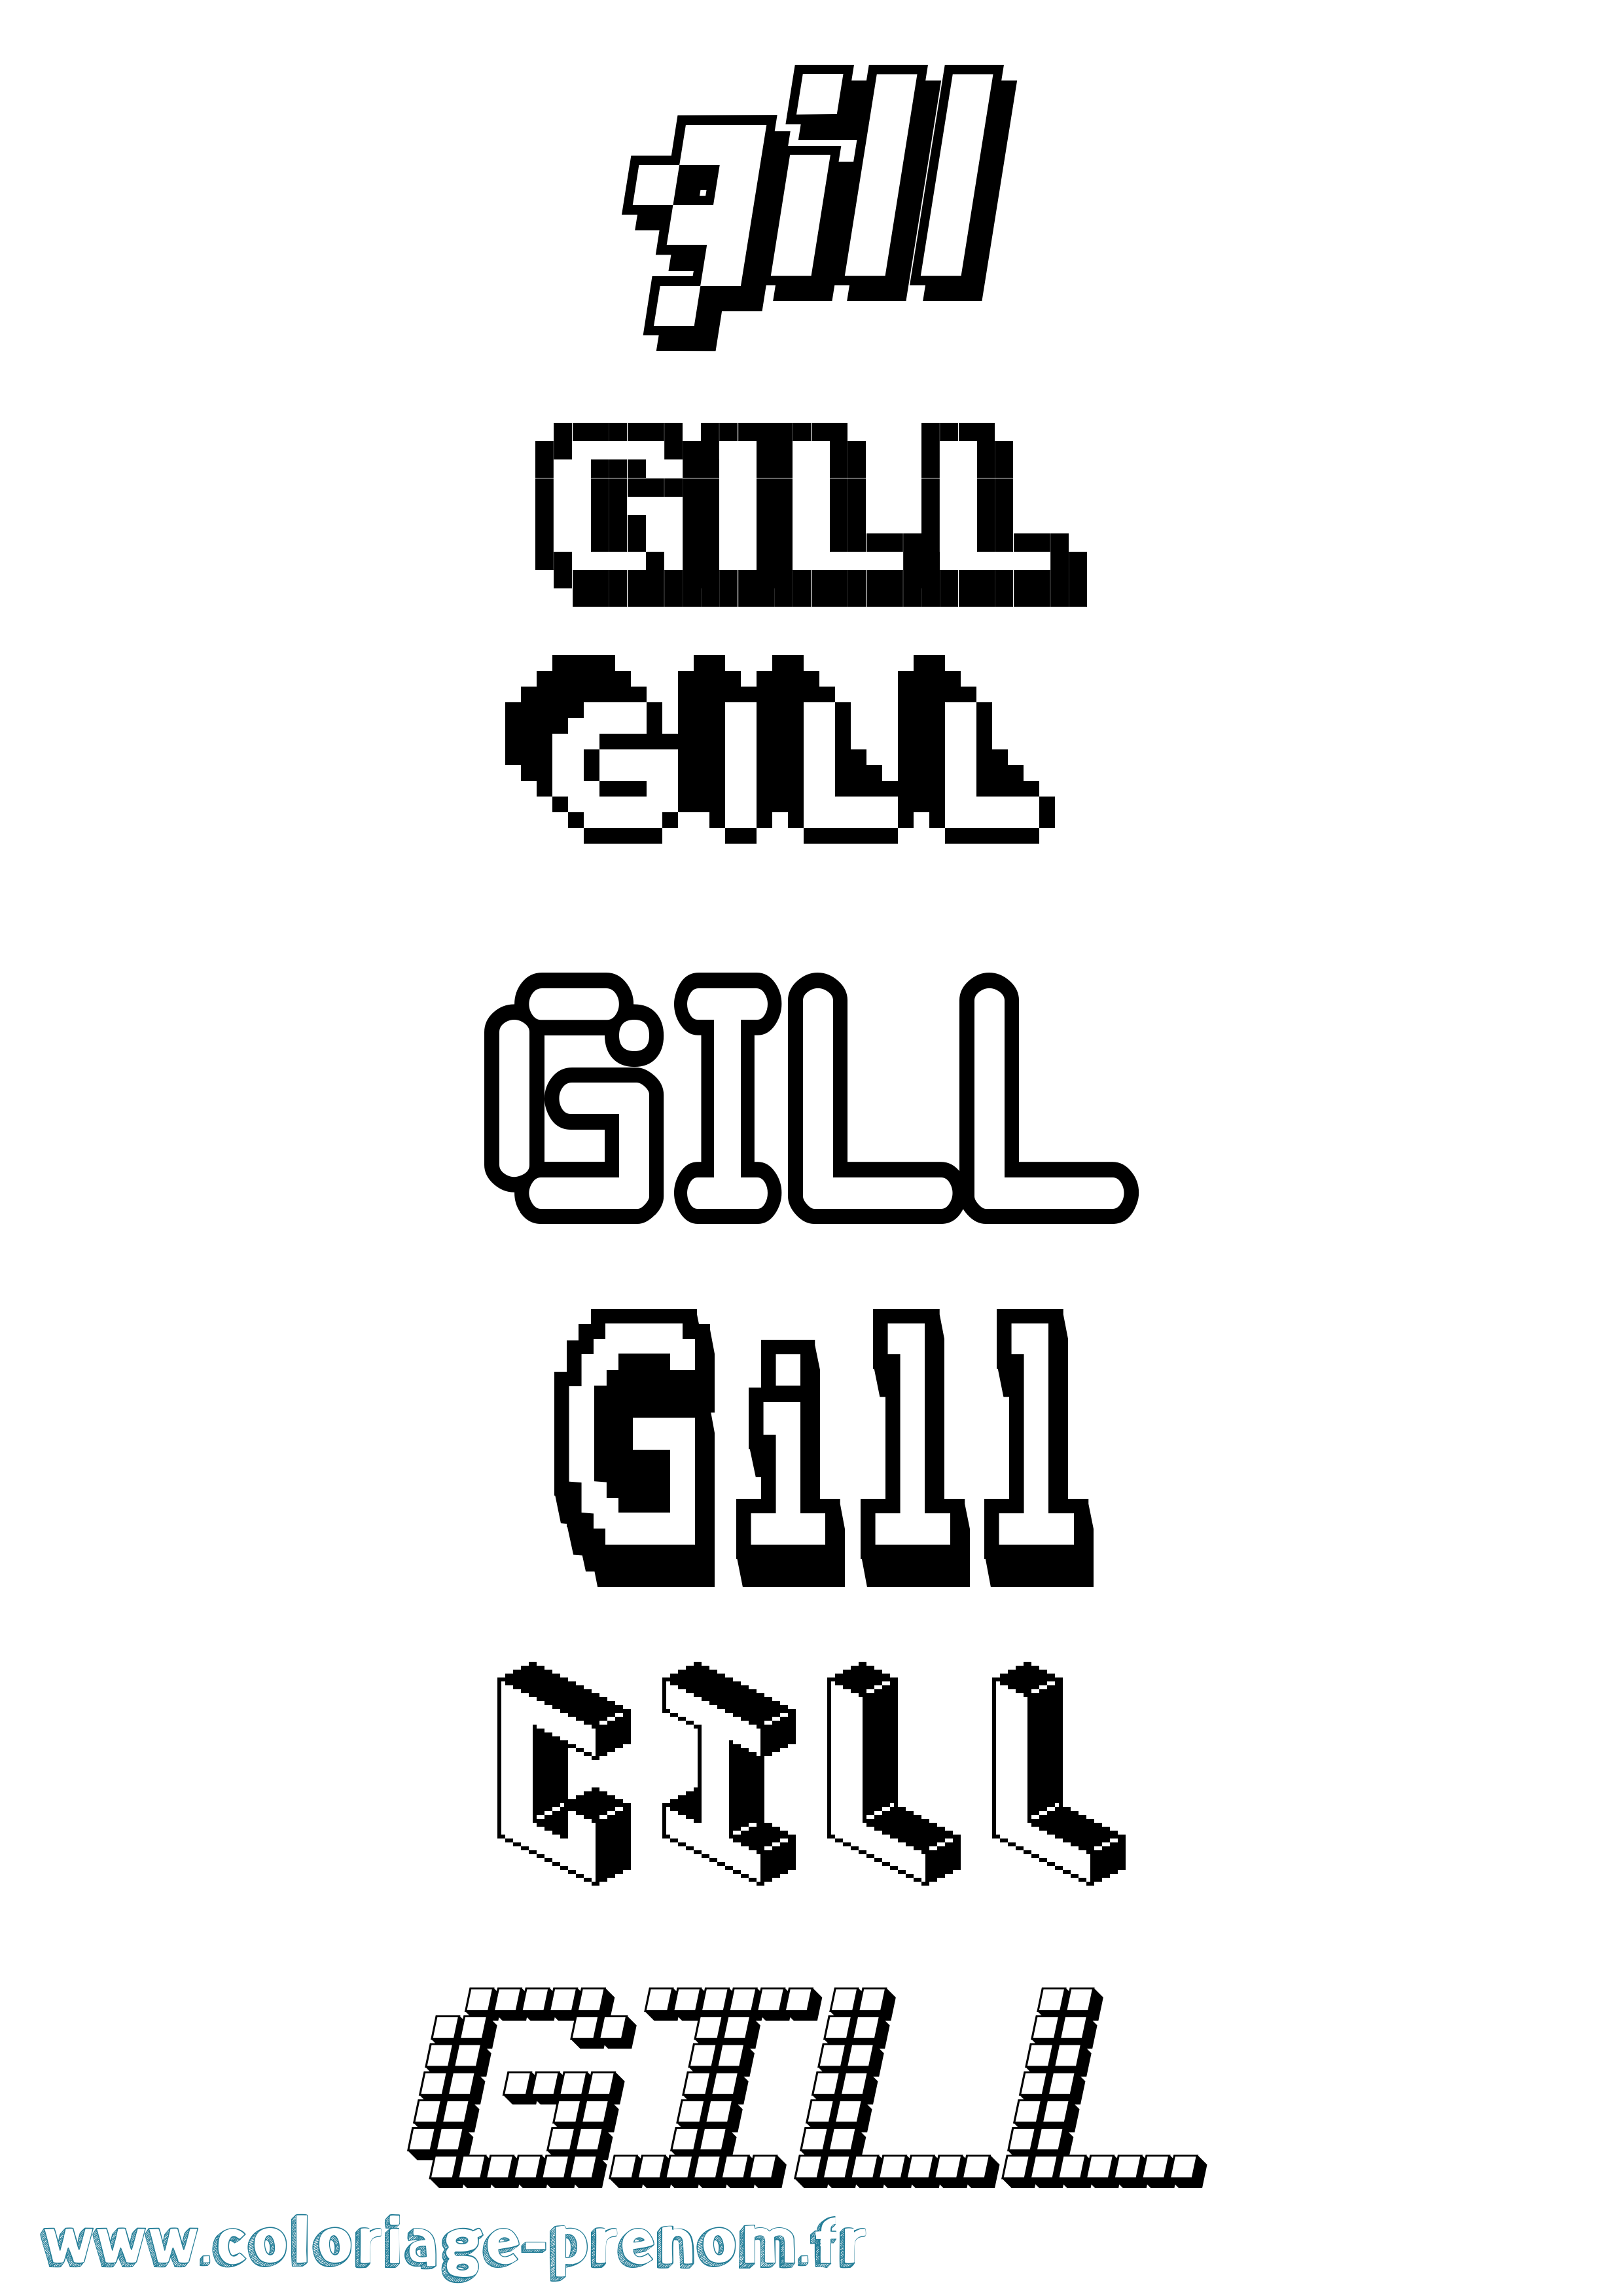 Coloriage prénom Gill Pixel